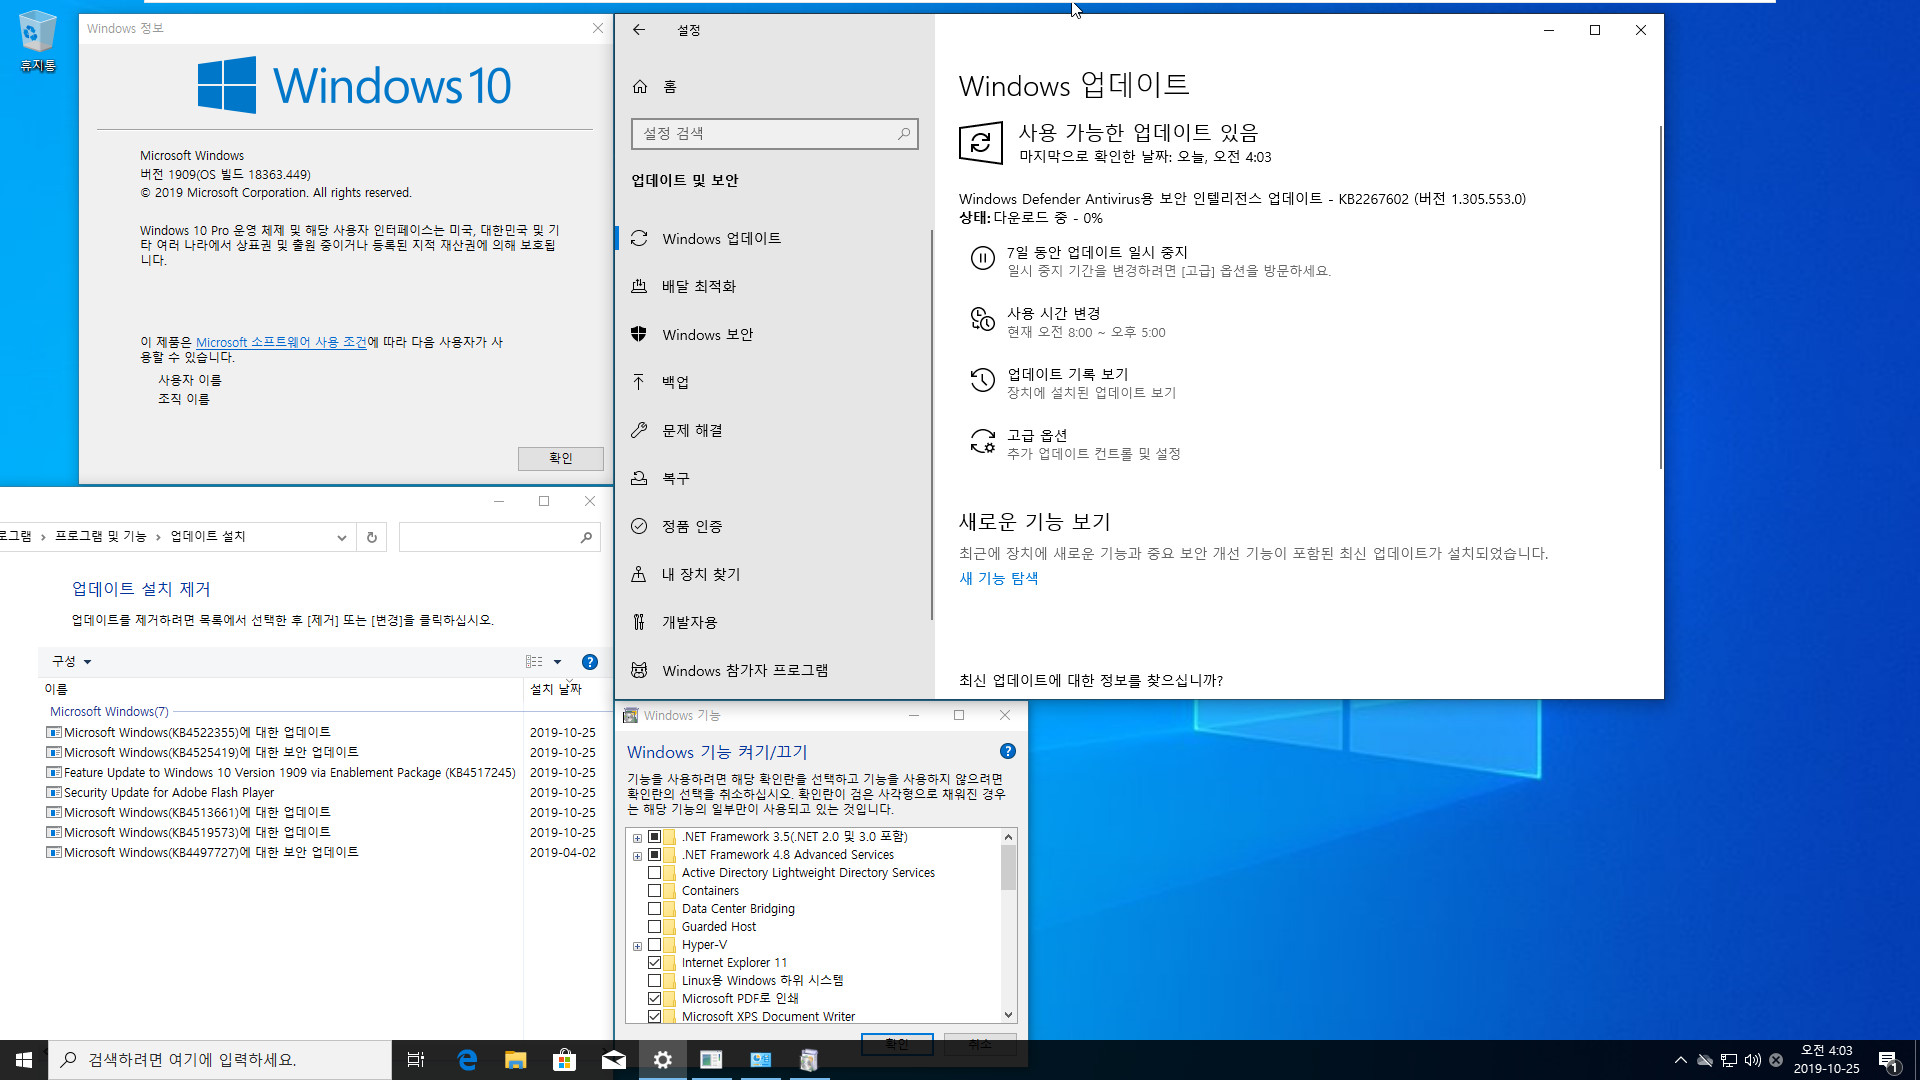 Windows 10 버전 1909 누적 업데이트 KB4522355 (OS 빌드 18363.449) [2019-10-24 일자] 수시 업데이트 나왔네요 - install.wim 통합중 입니다 - 64비트 확인 2019-10-25_040322.jpg